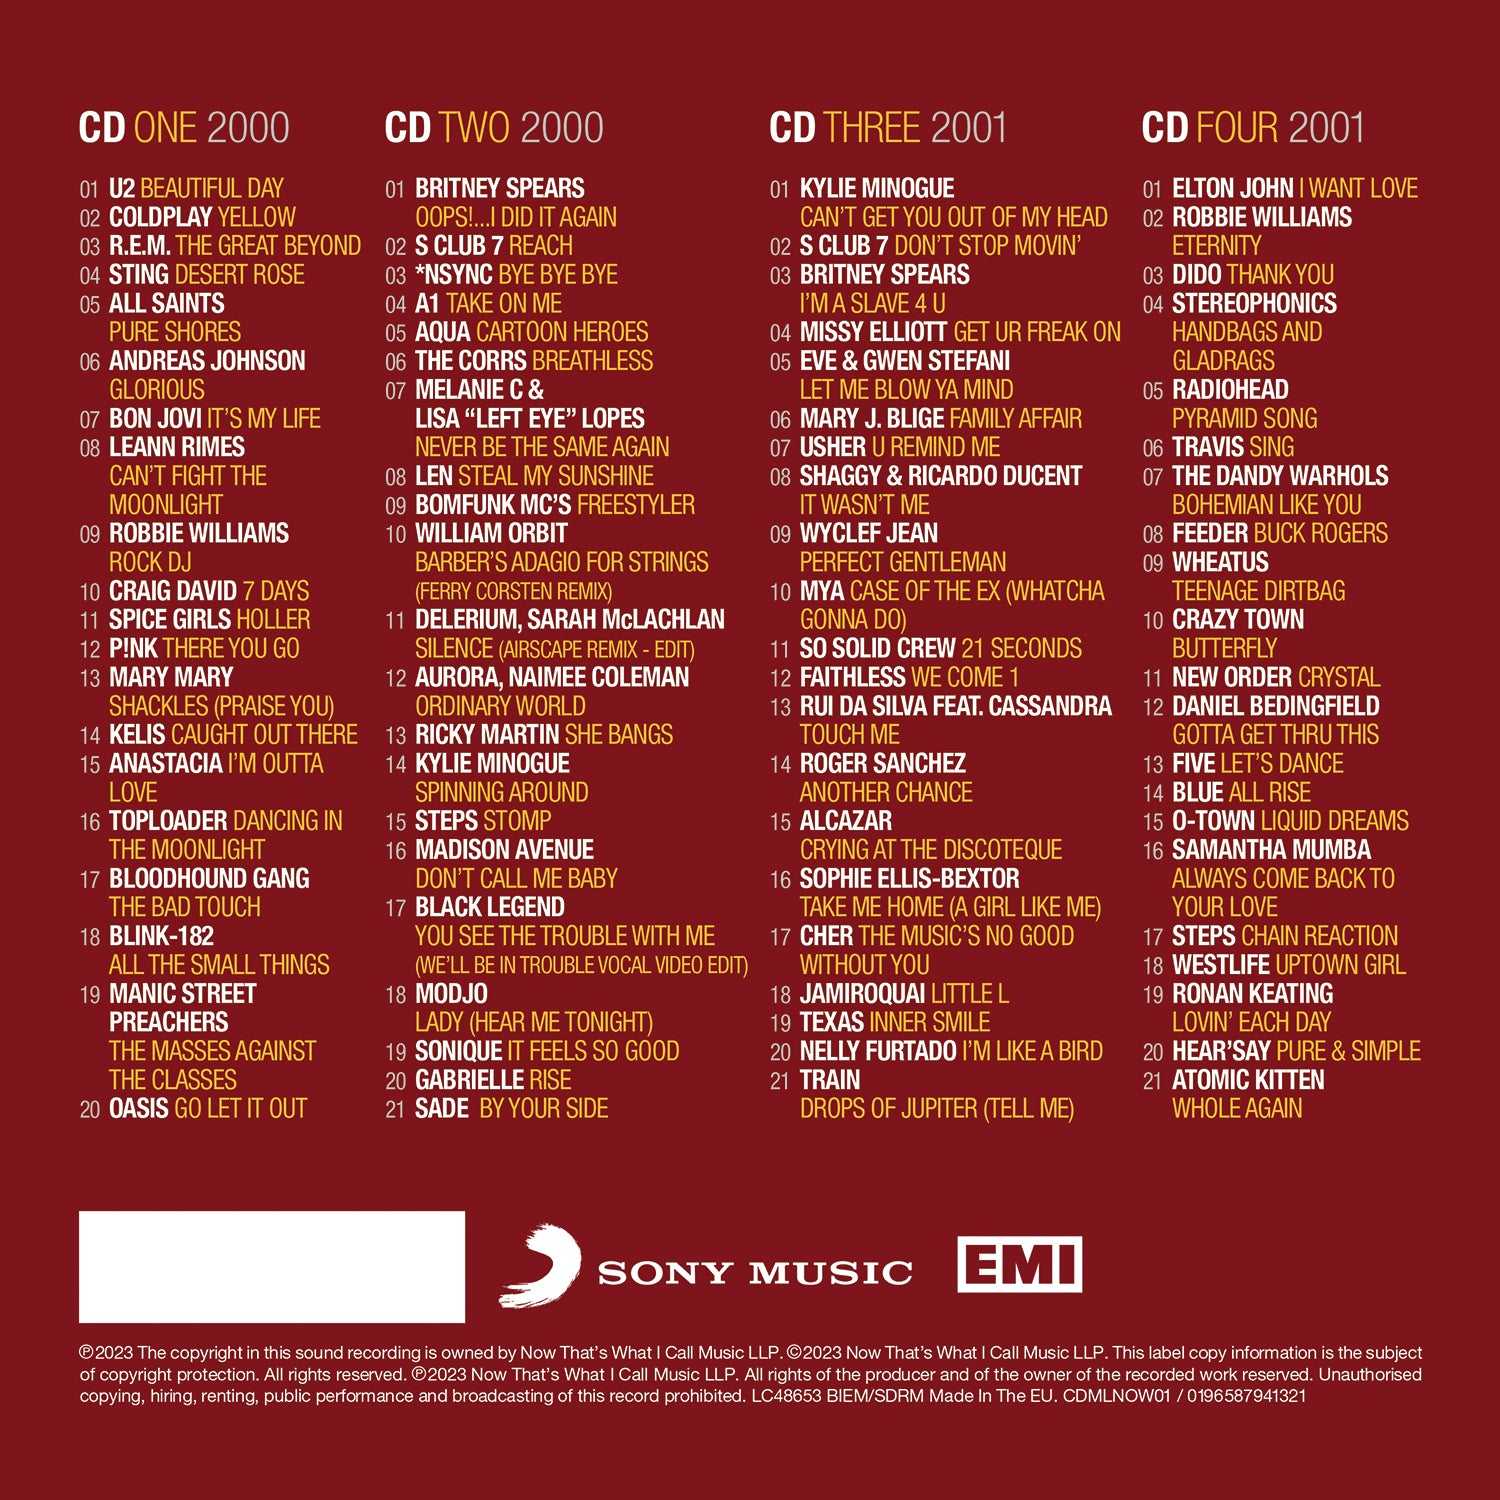 NOW - Millennium 2000 - 2001 (4CD)